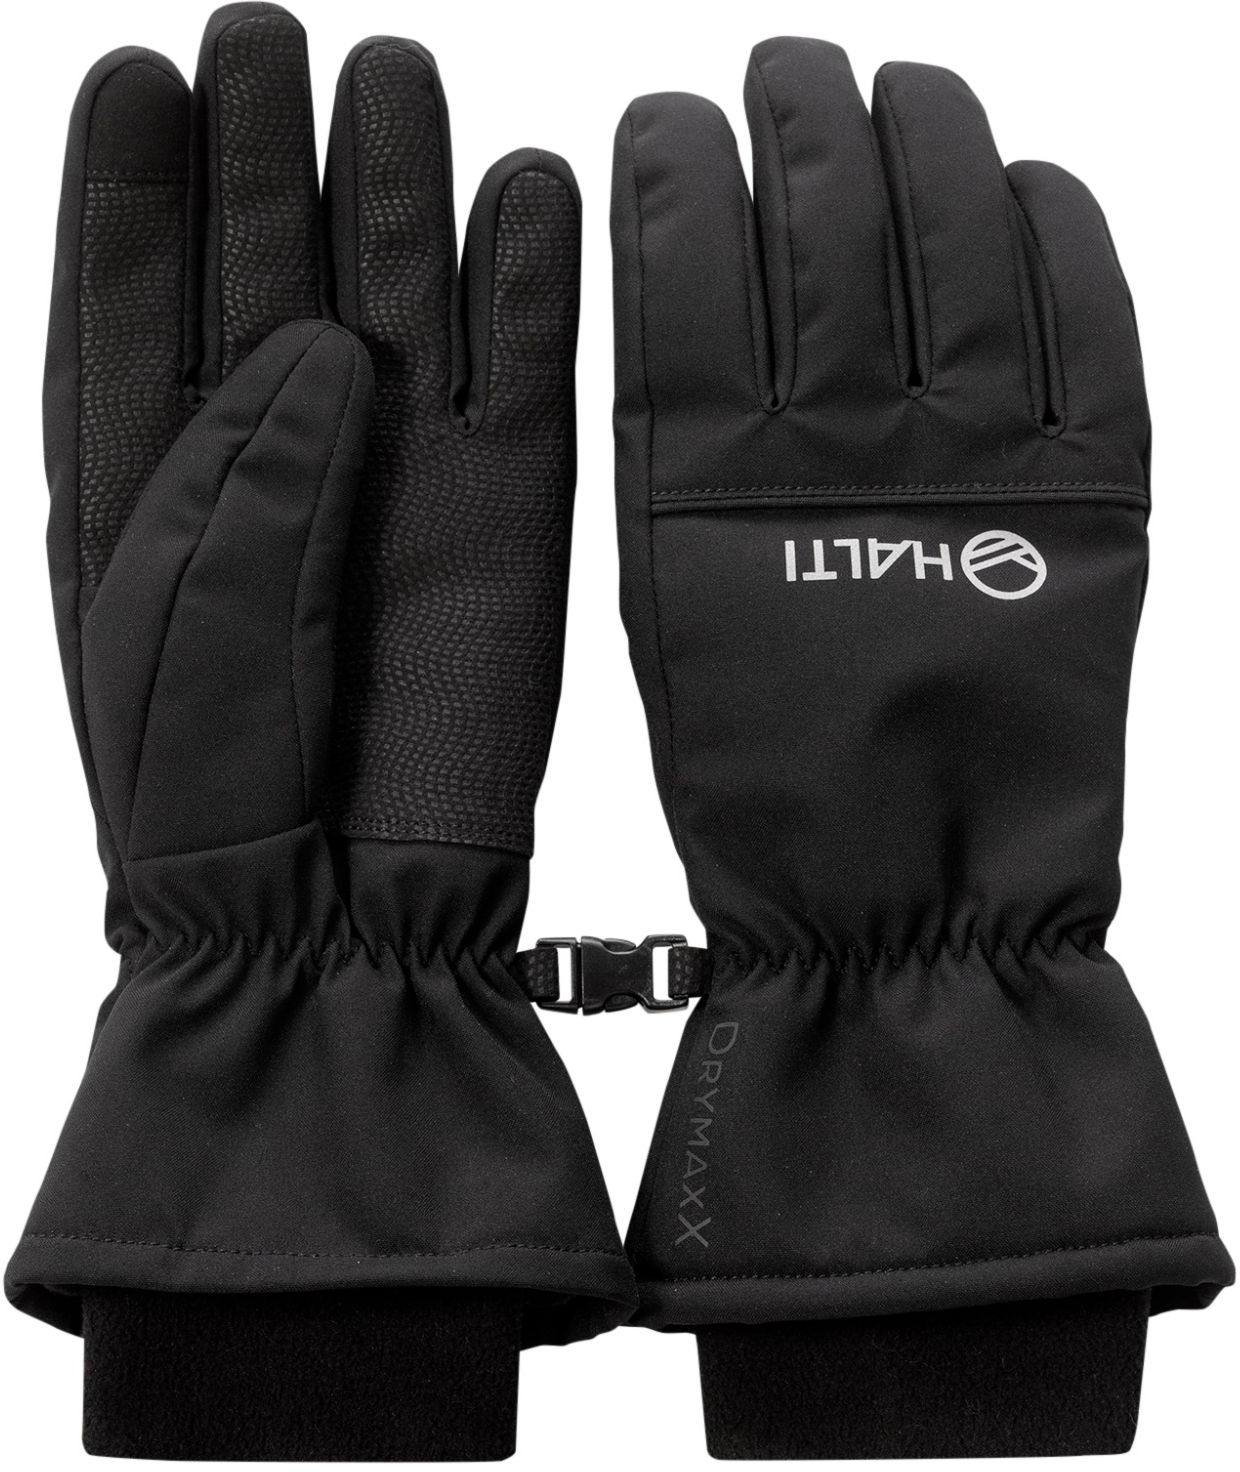 Halti Alium DX Gloves